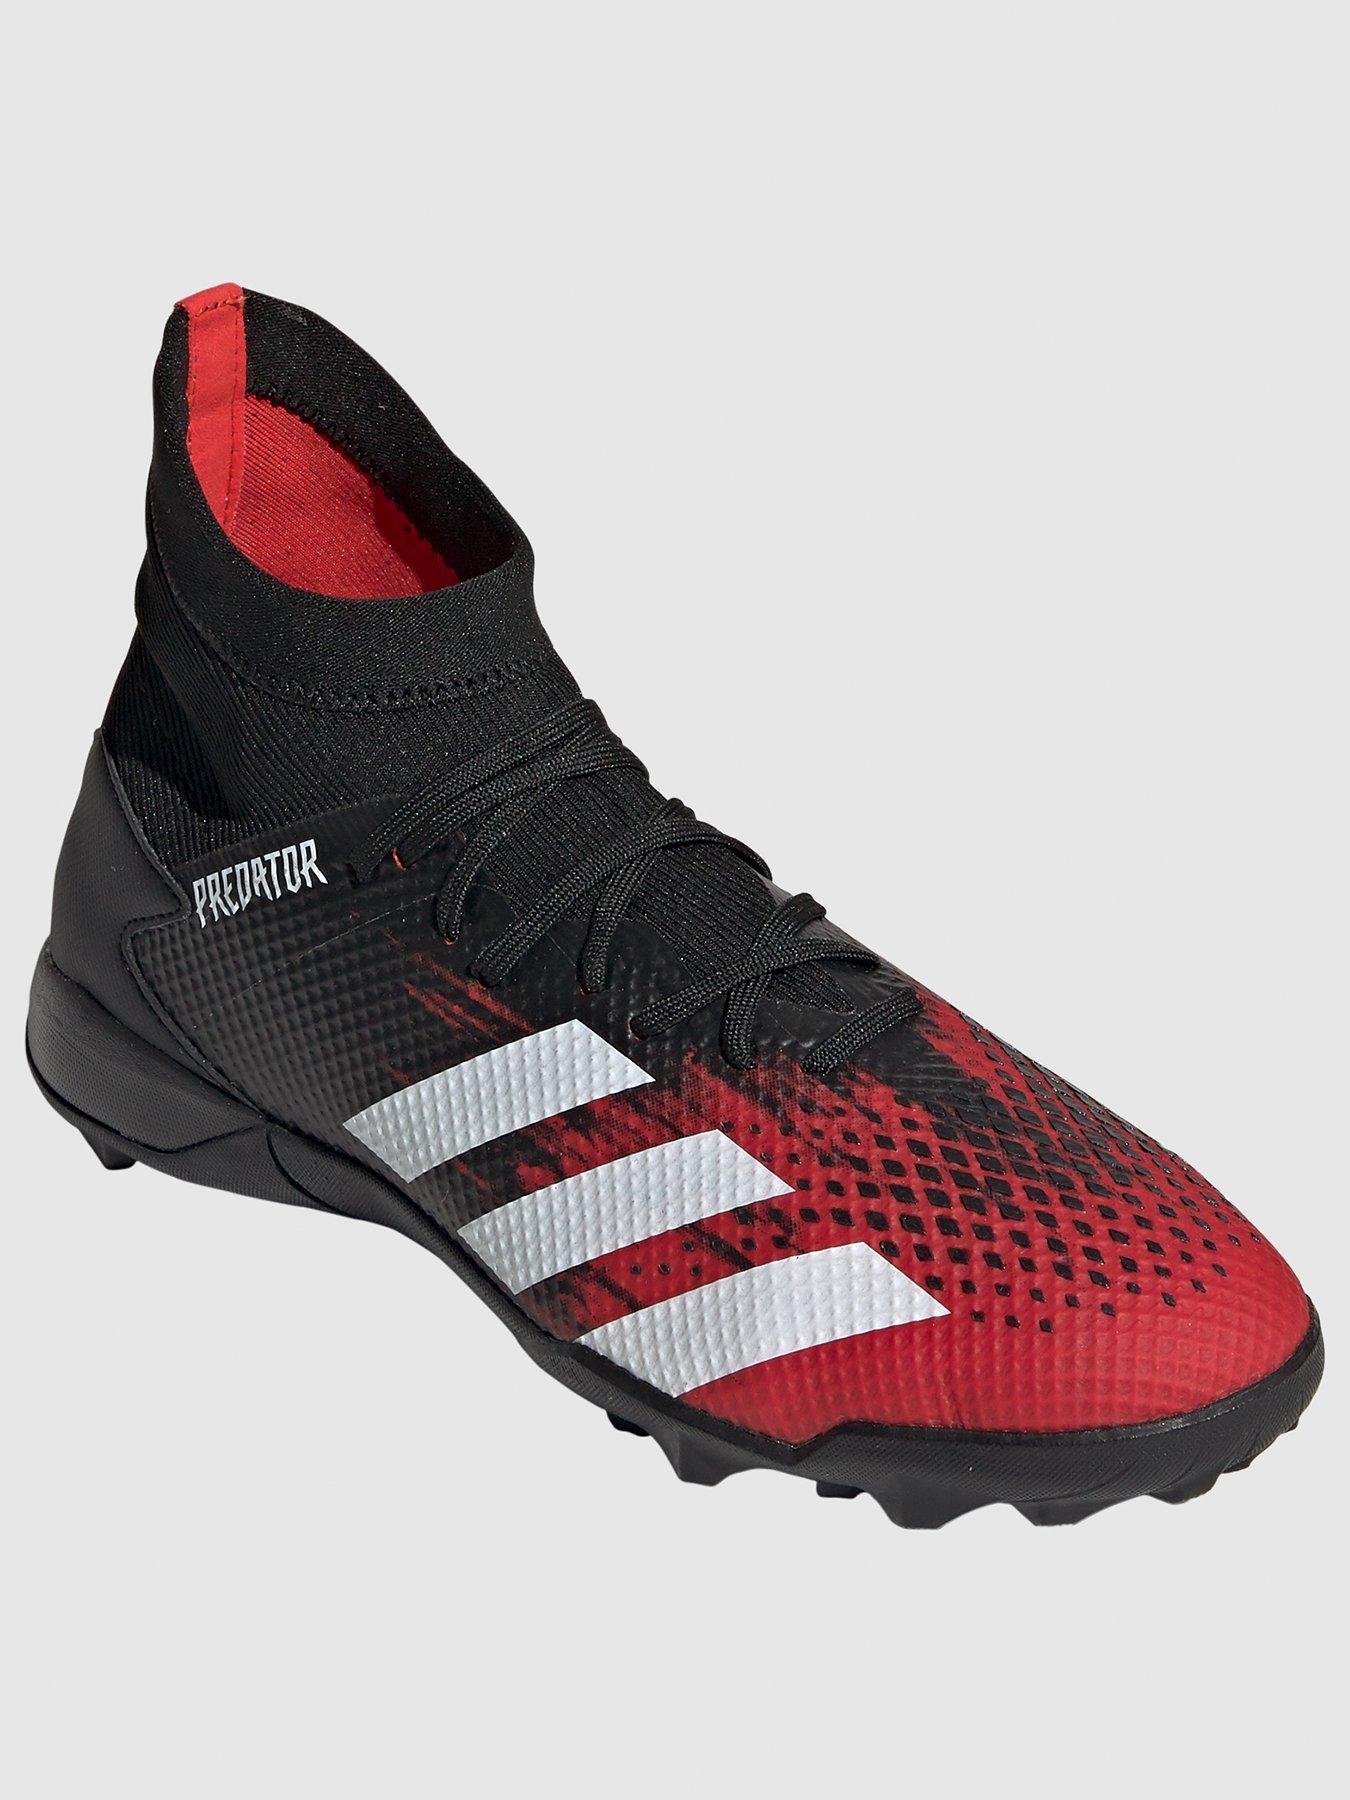 adidas football boots astro